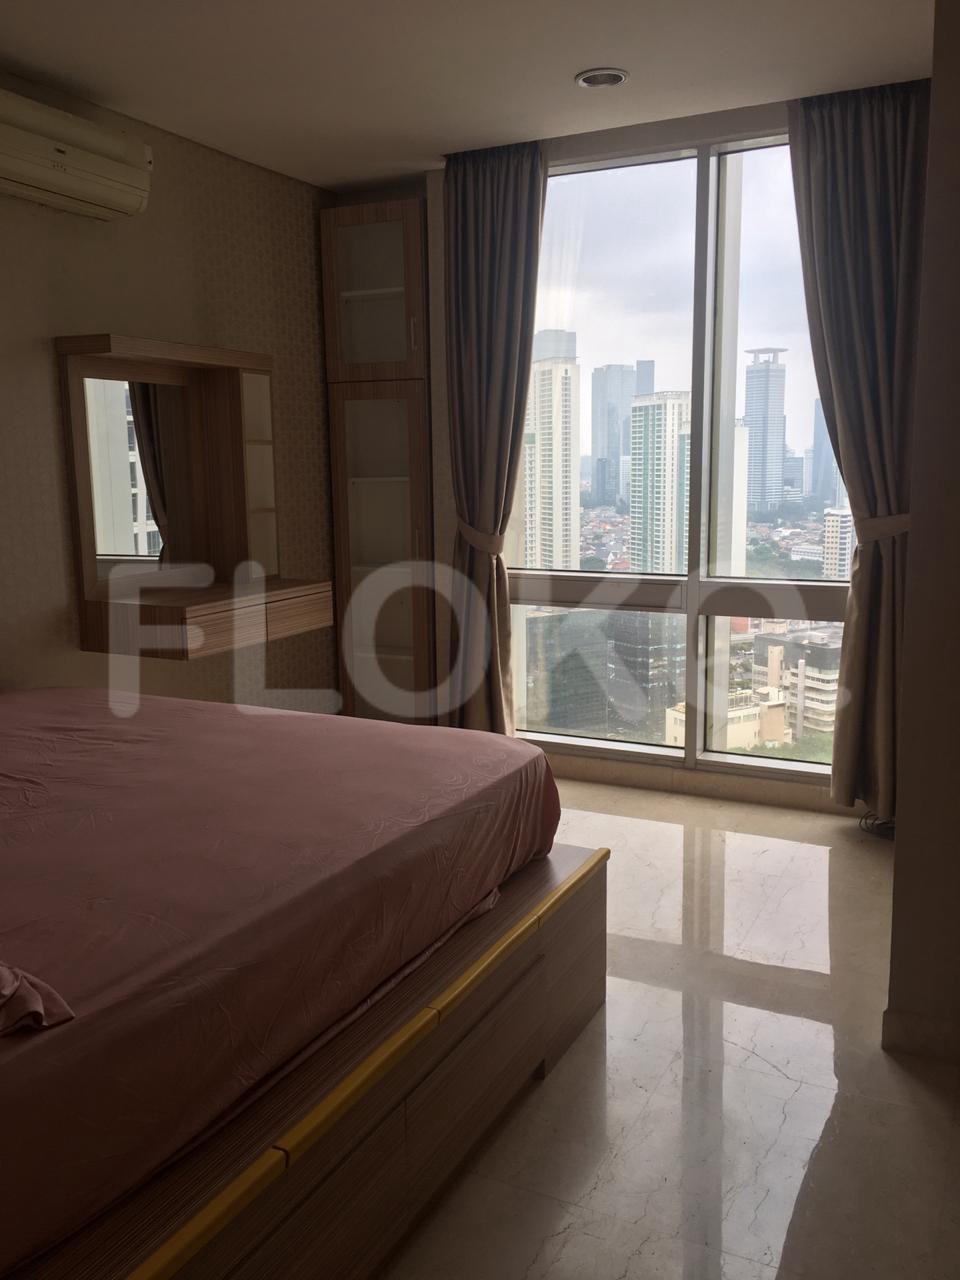 2 Bedroom on 15th Floor fra73a for Rent in The Masterpiece Condominium Epicentrum 